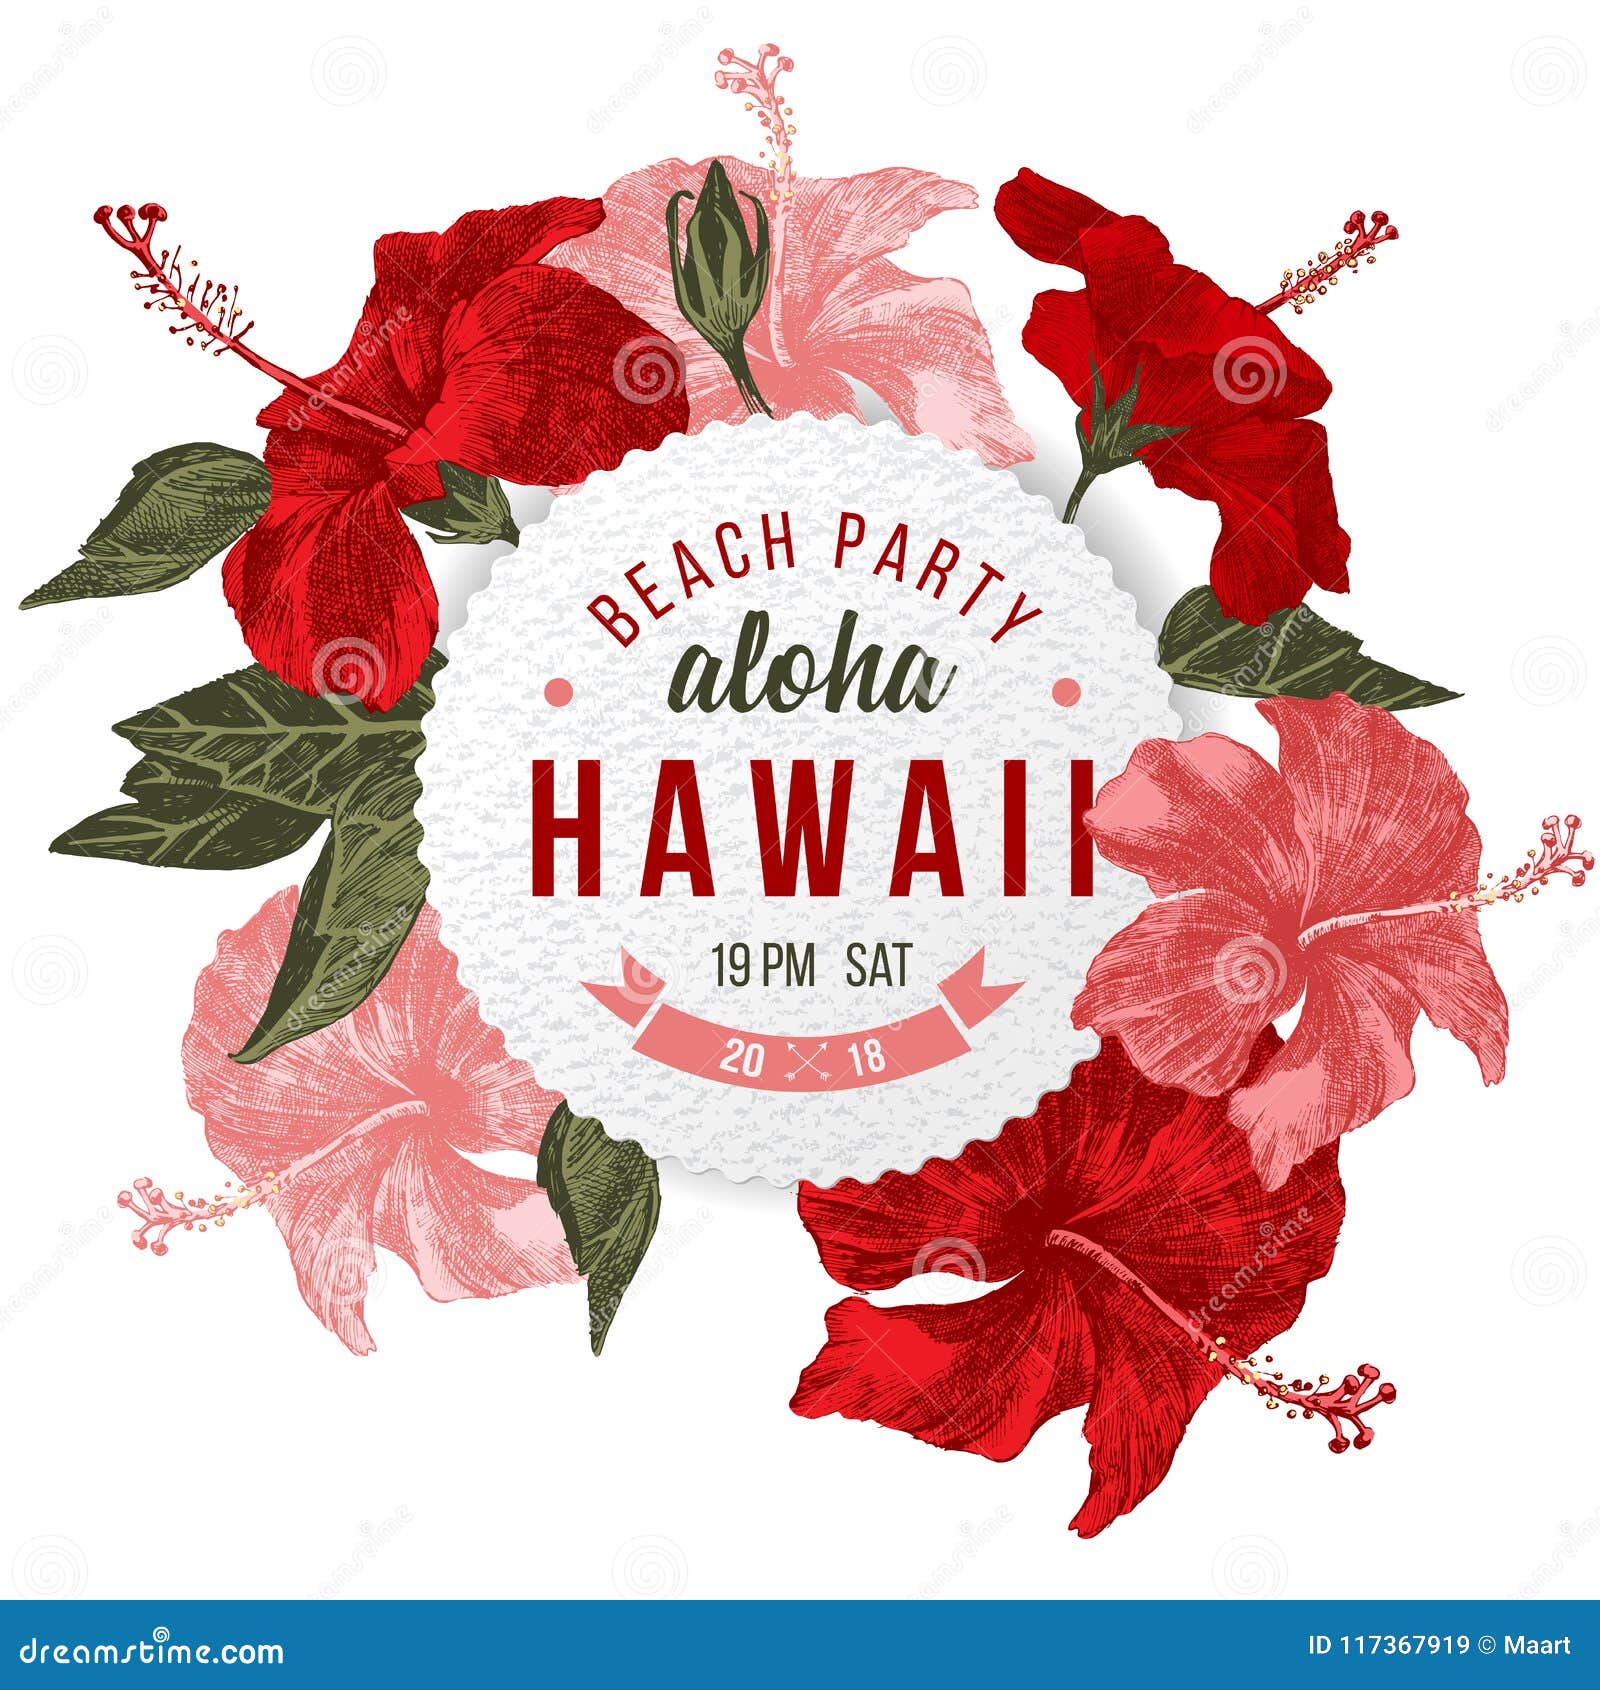 aloha hawaii beach party poster